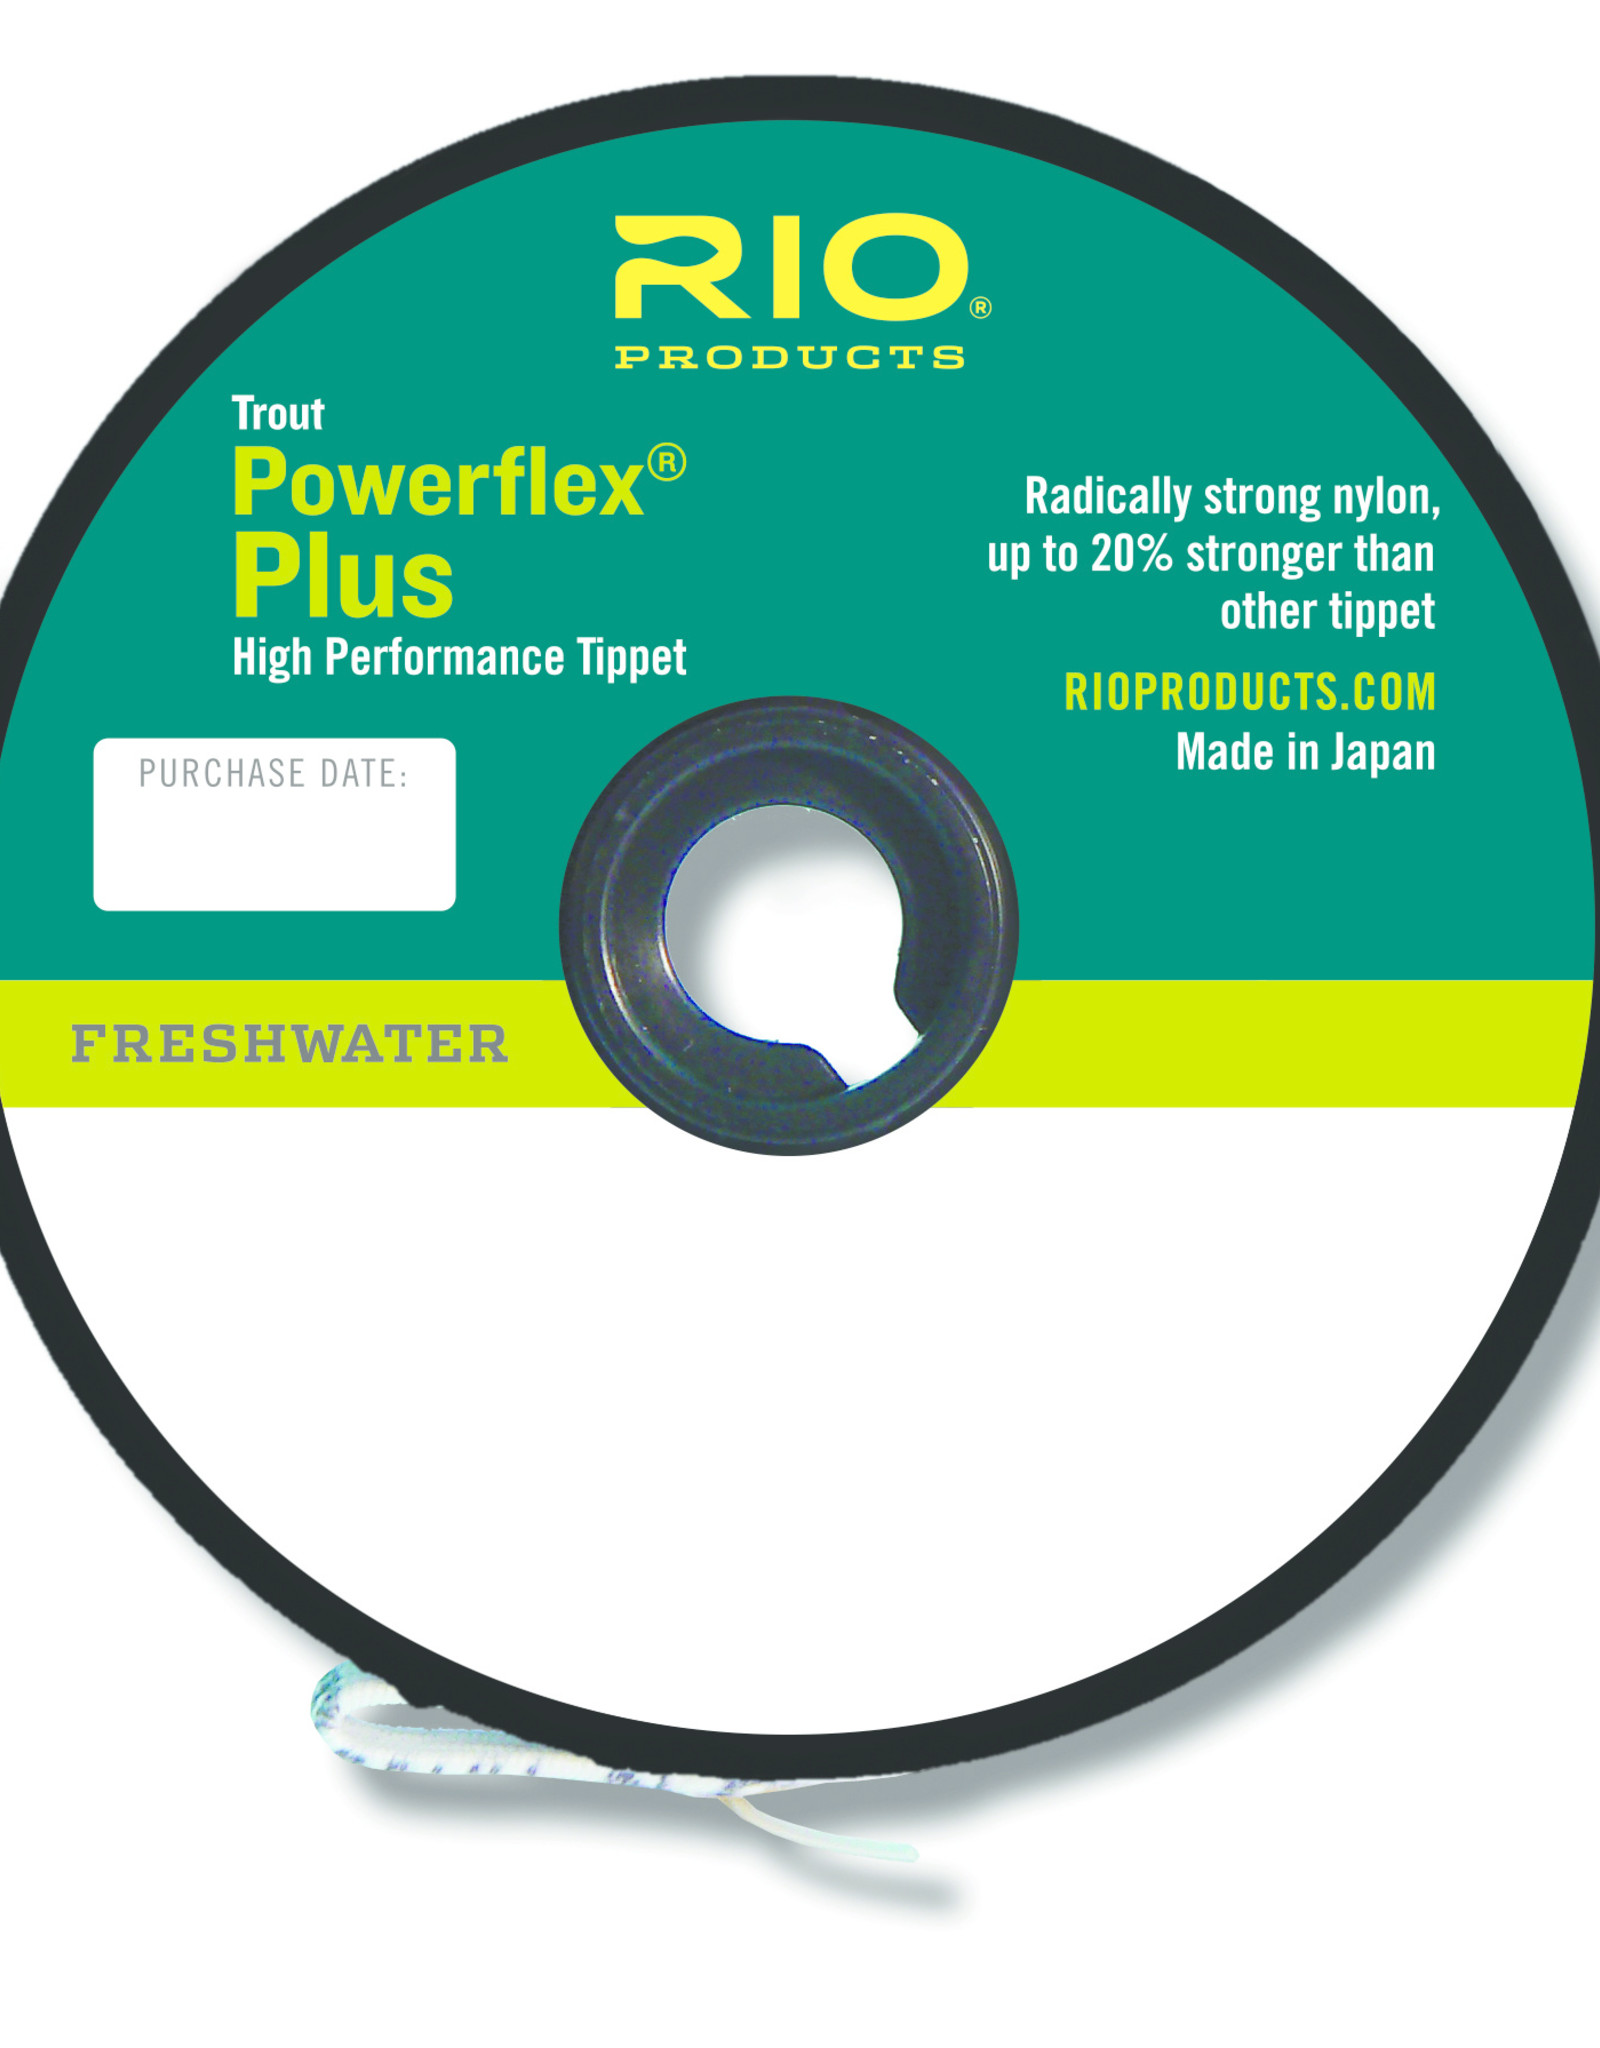 RIO PRODUCTS POWERFLEX PLUS TIPPET